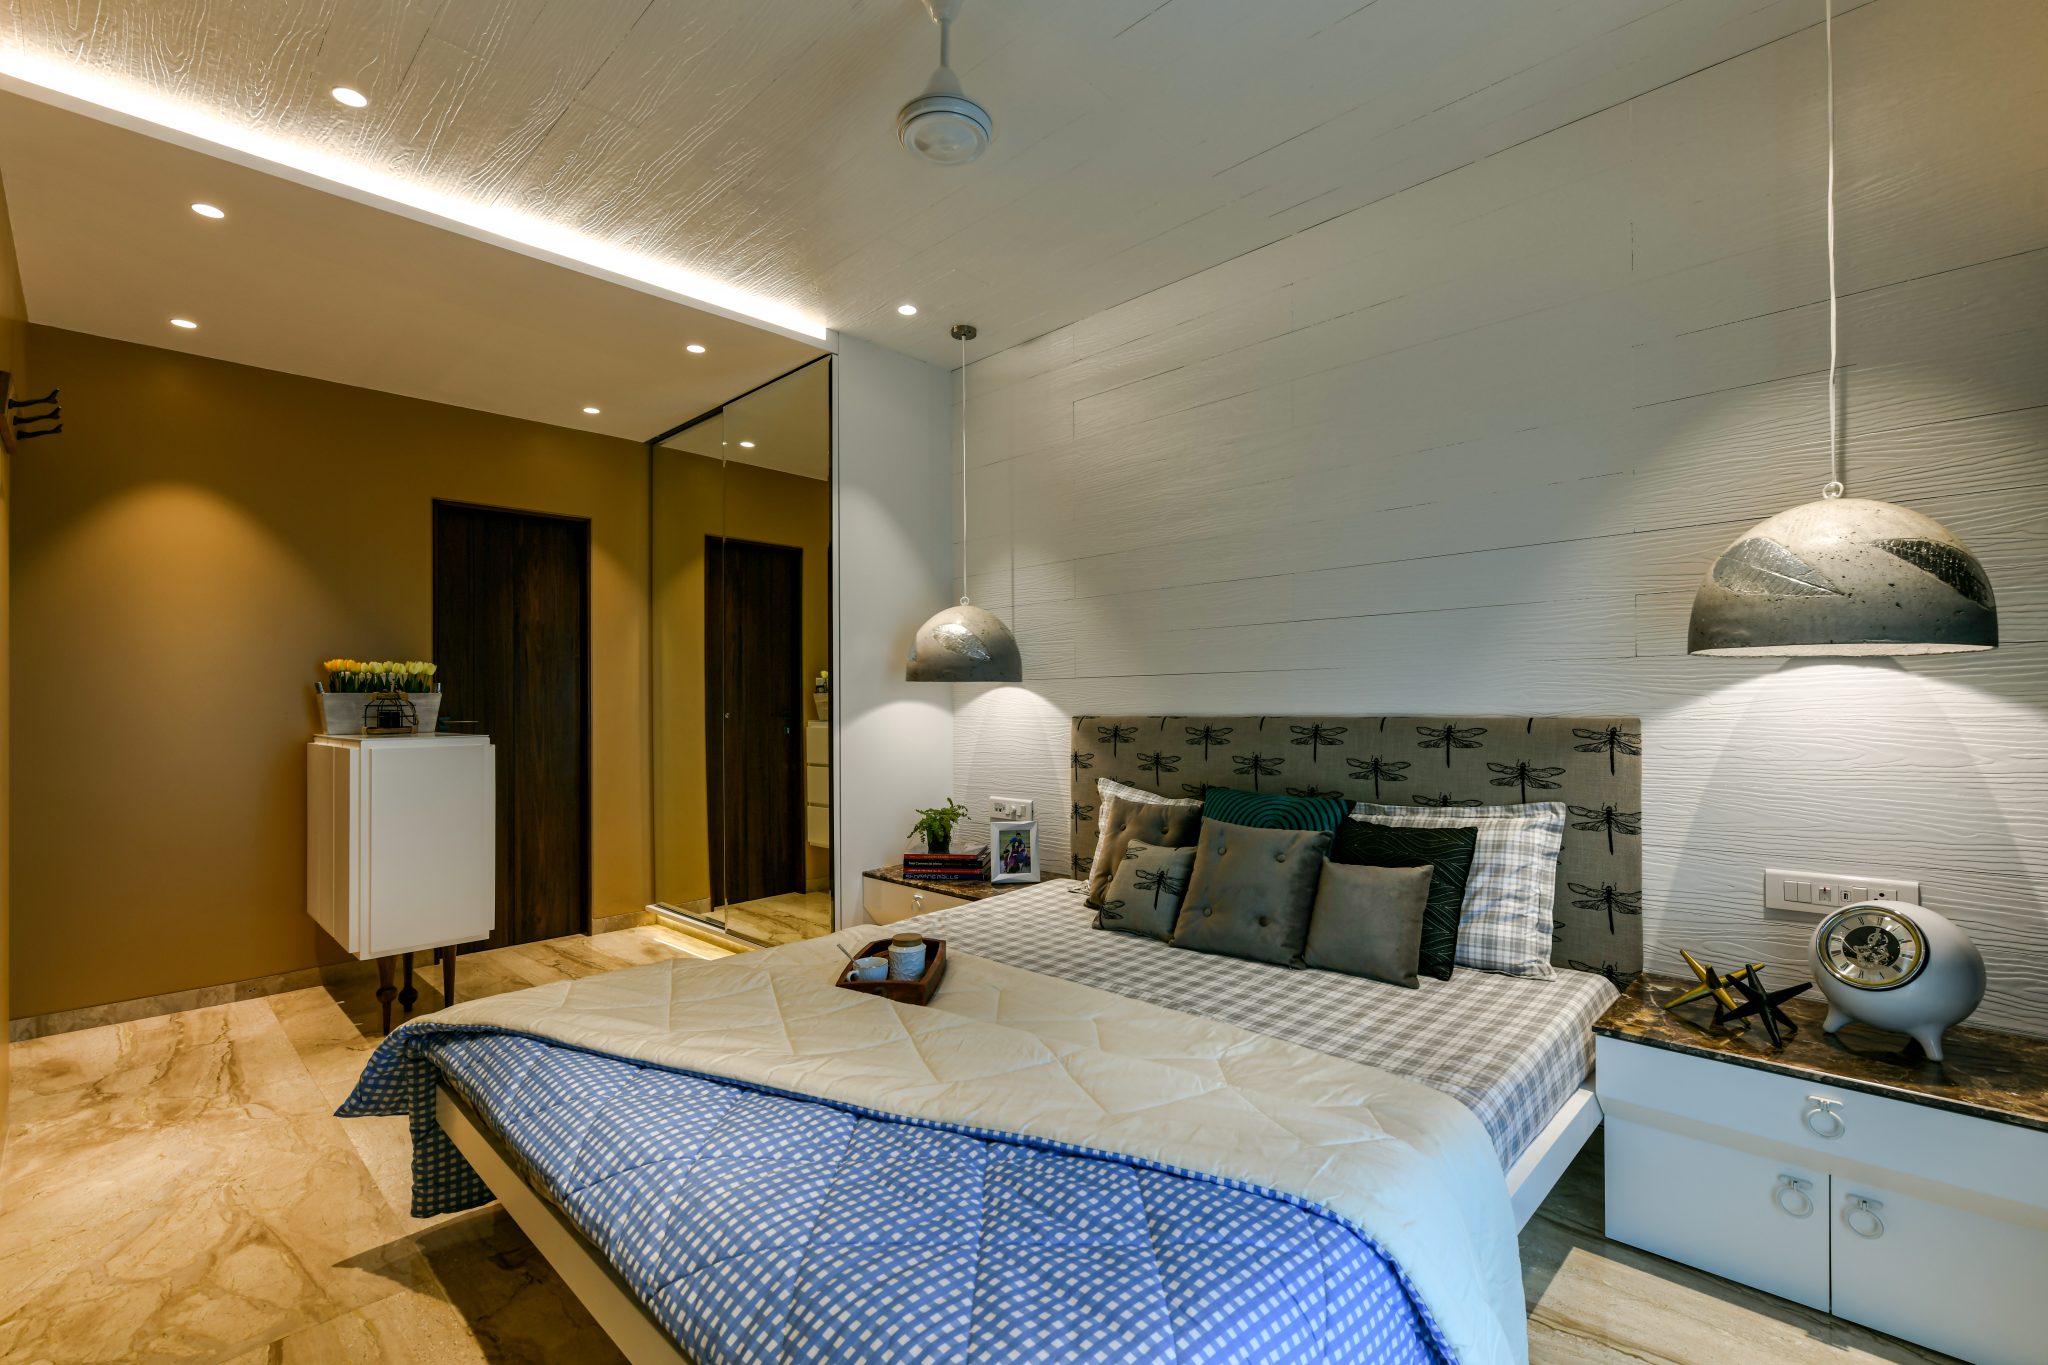 Five Bedroom Decor Elements That Make It SUPER Cozy